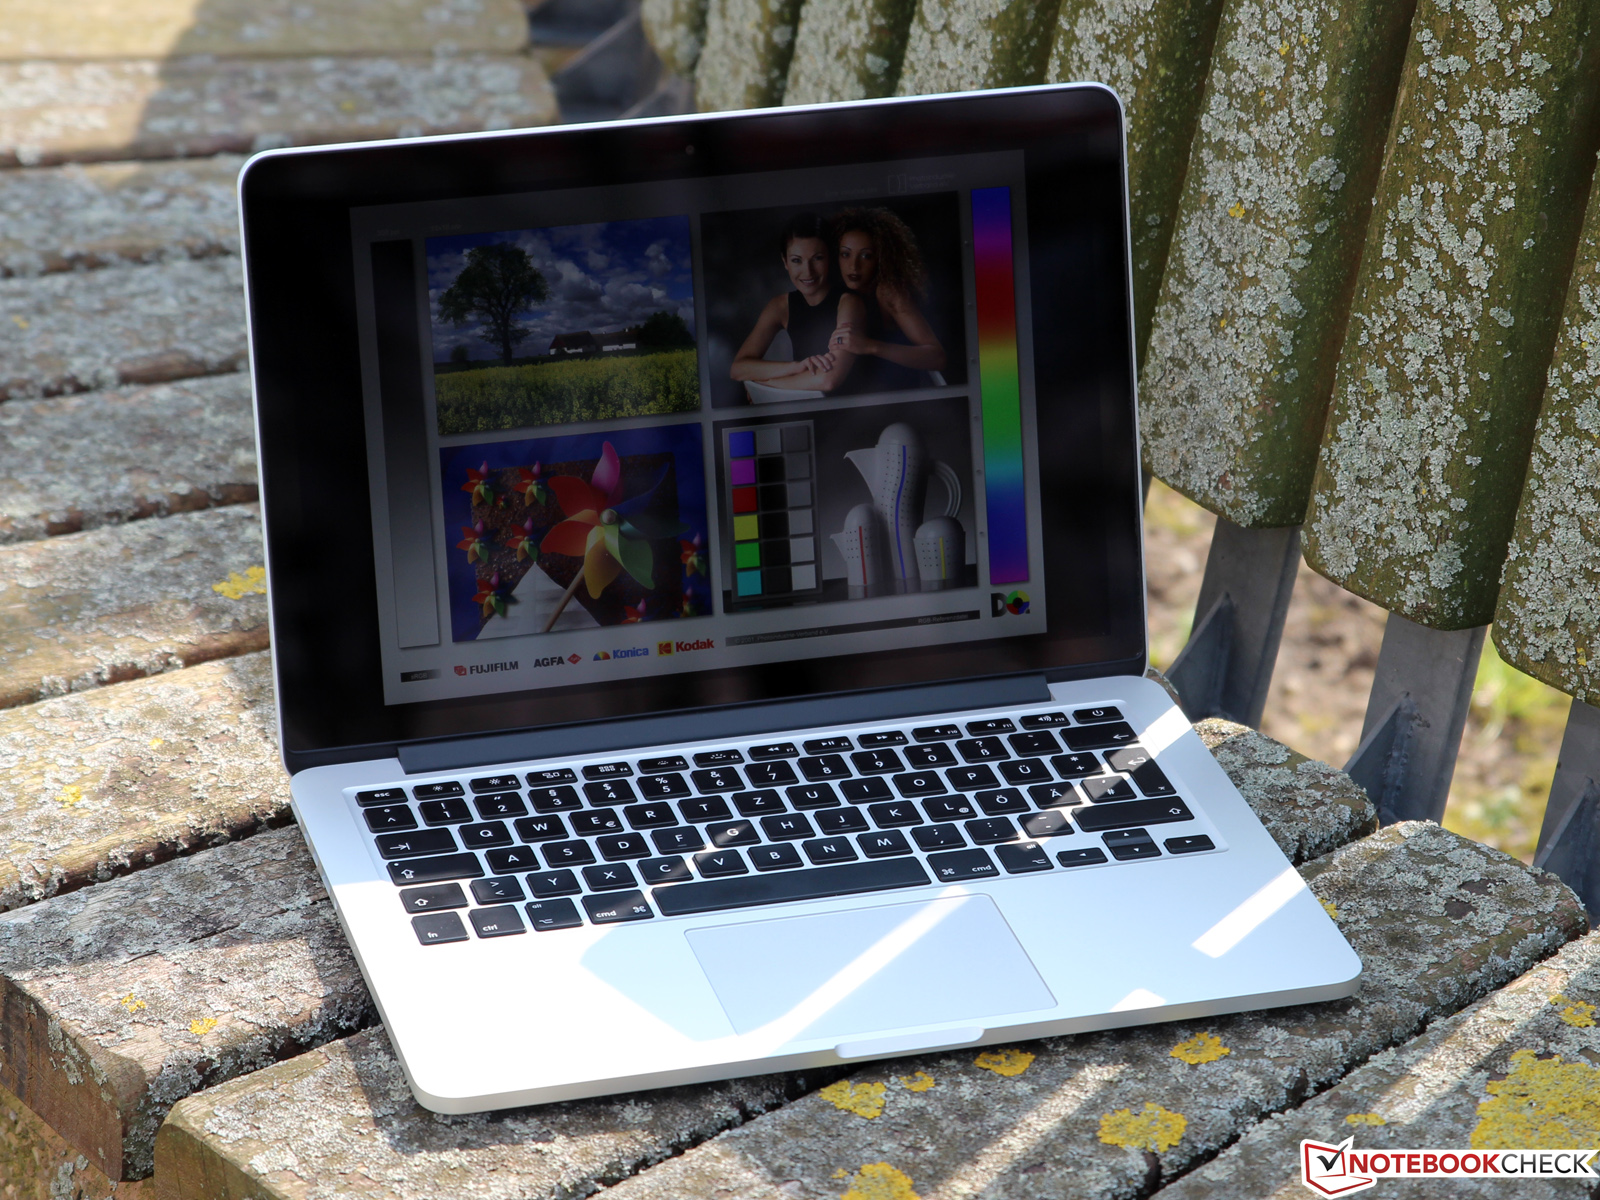 2015 apple macbook pro 13 inch 128gb